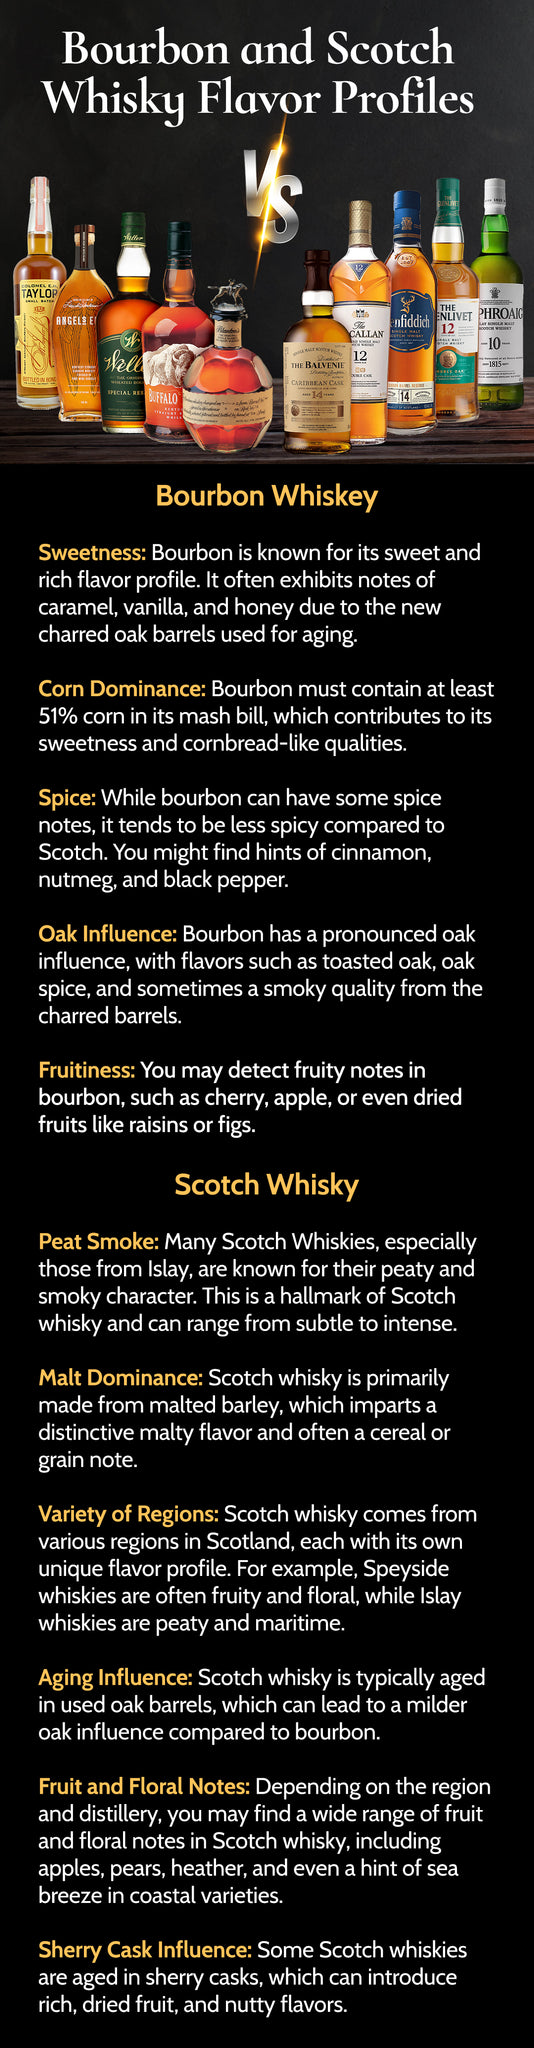 Bourbon vs scotch - Flavor Profile